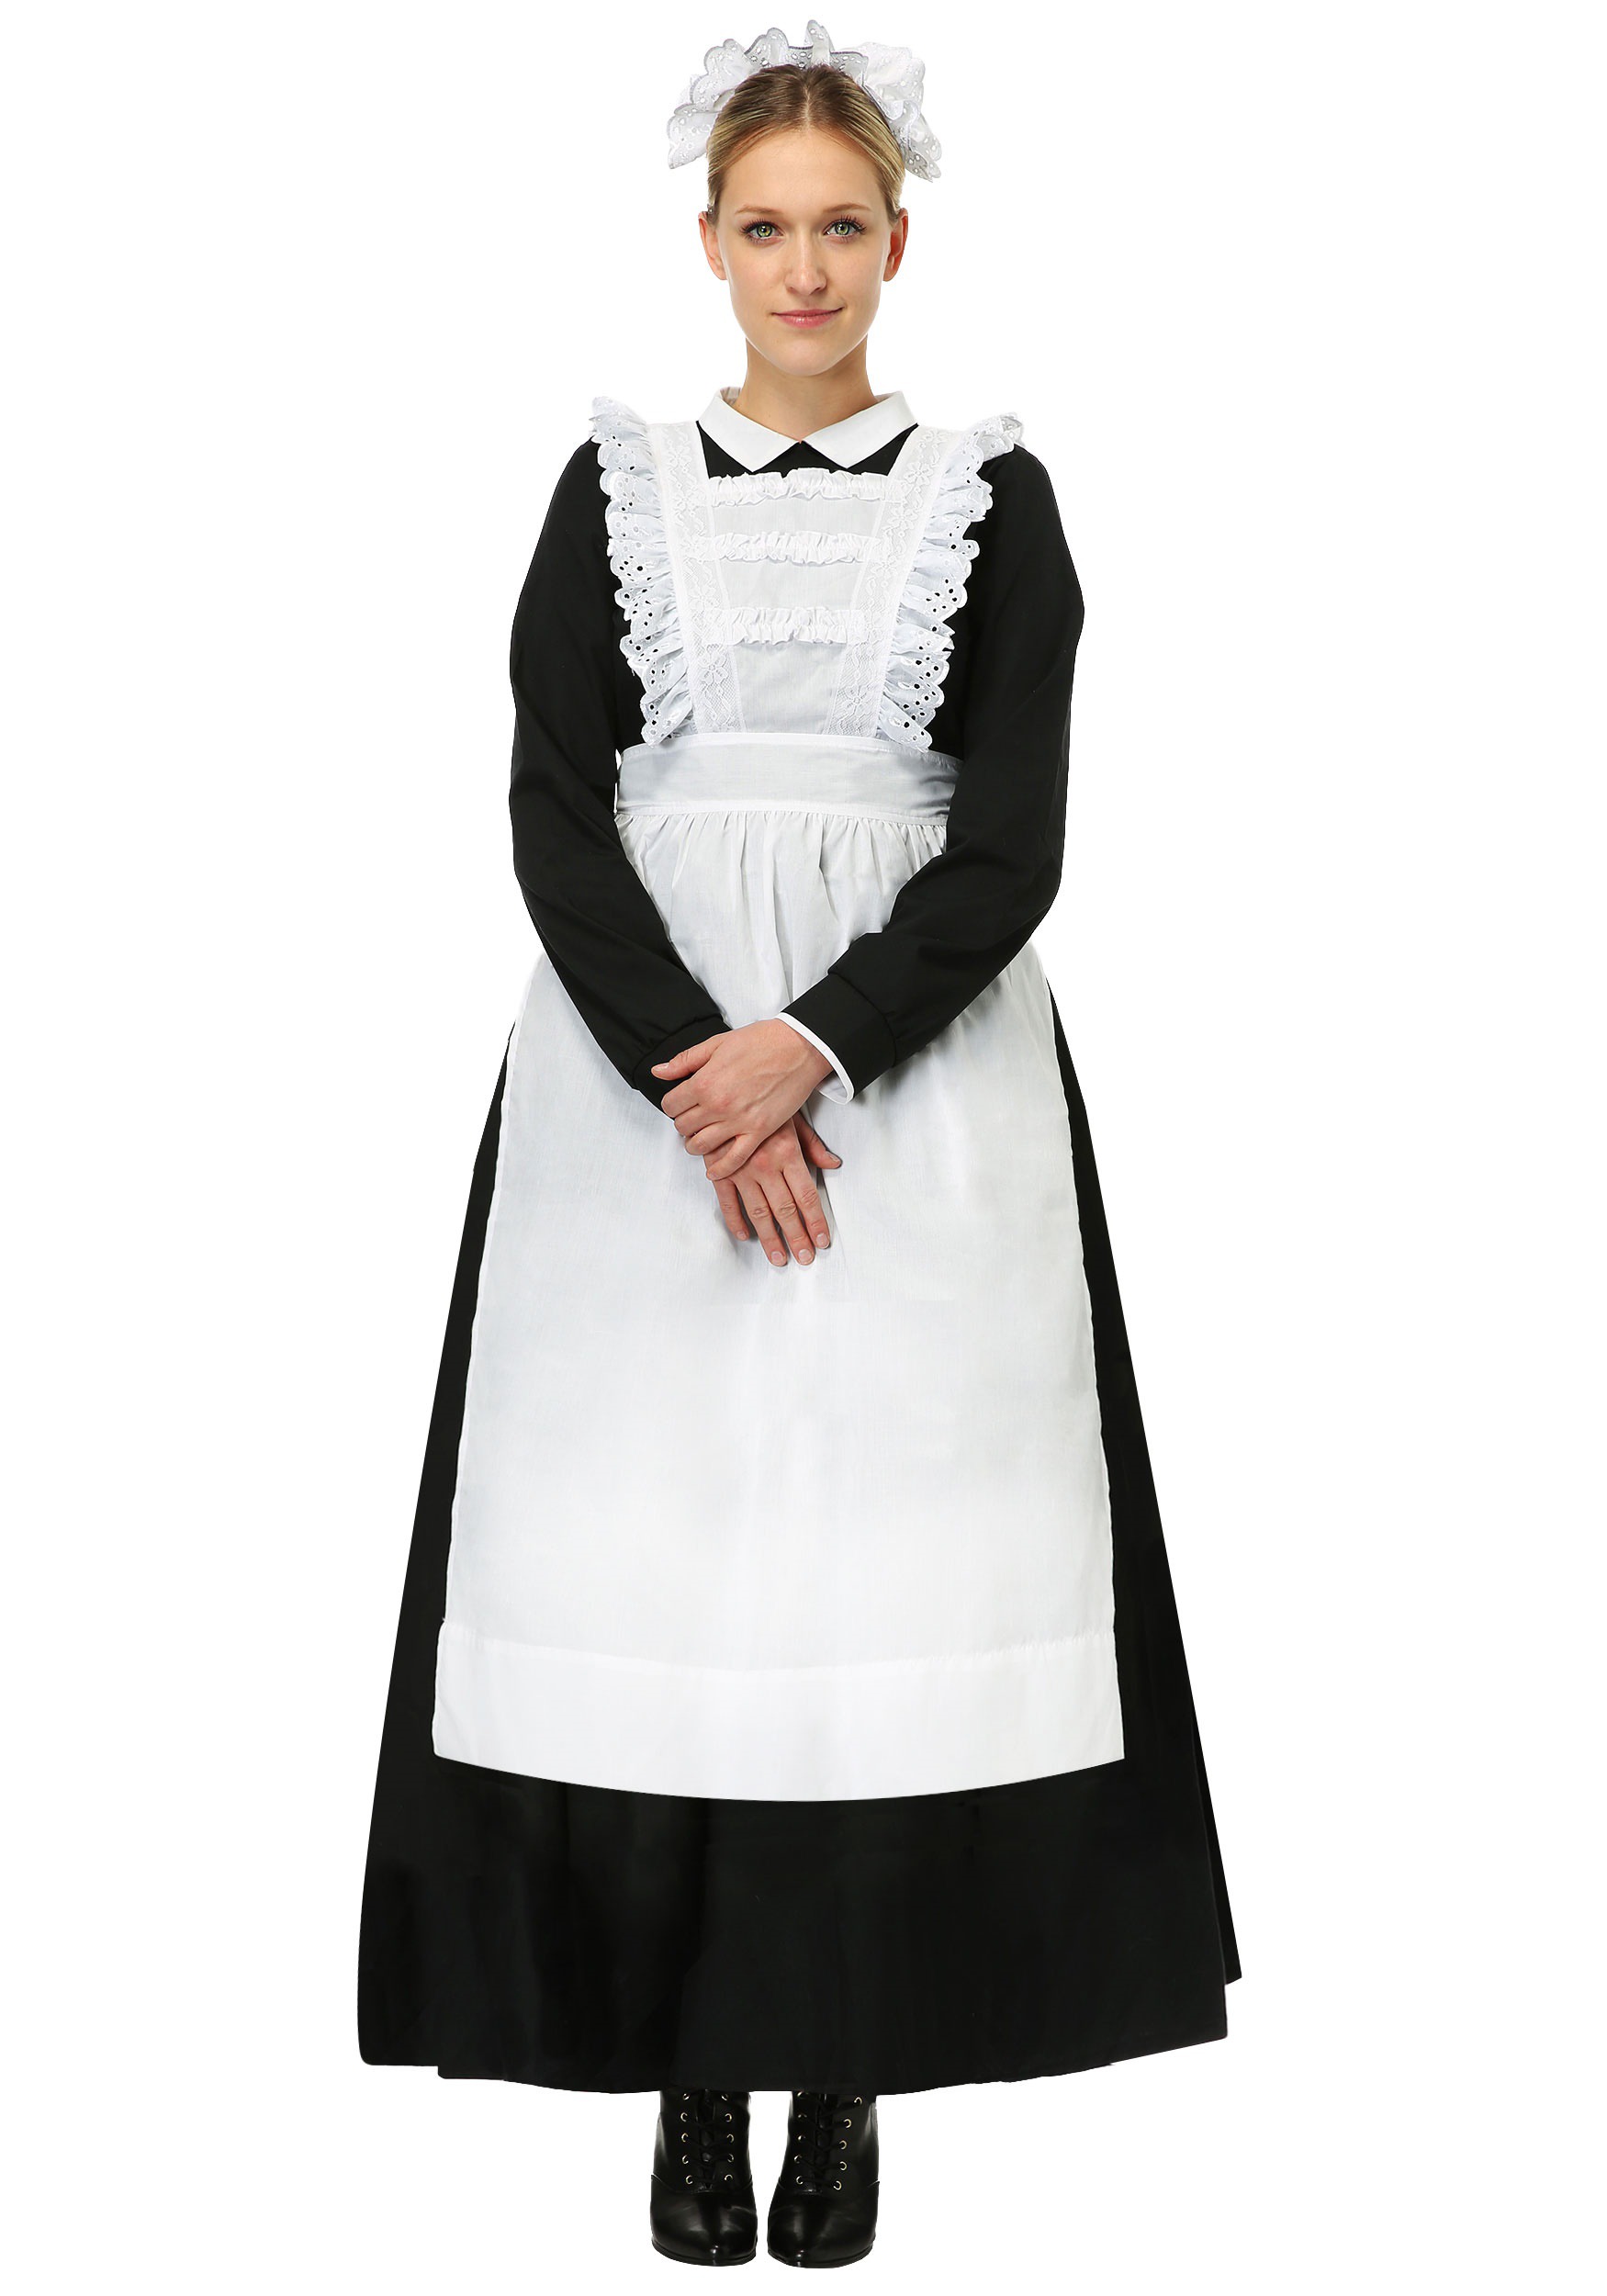 Photos - Fancy Dress FUN Costumes Traditional Maid Women's Costume Black/White FUN1520AD